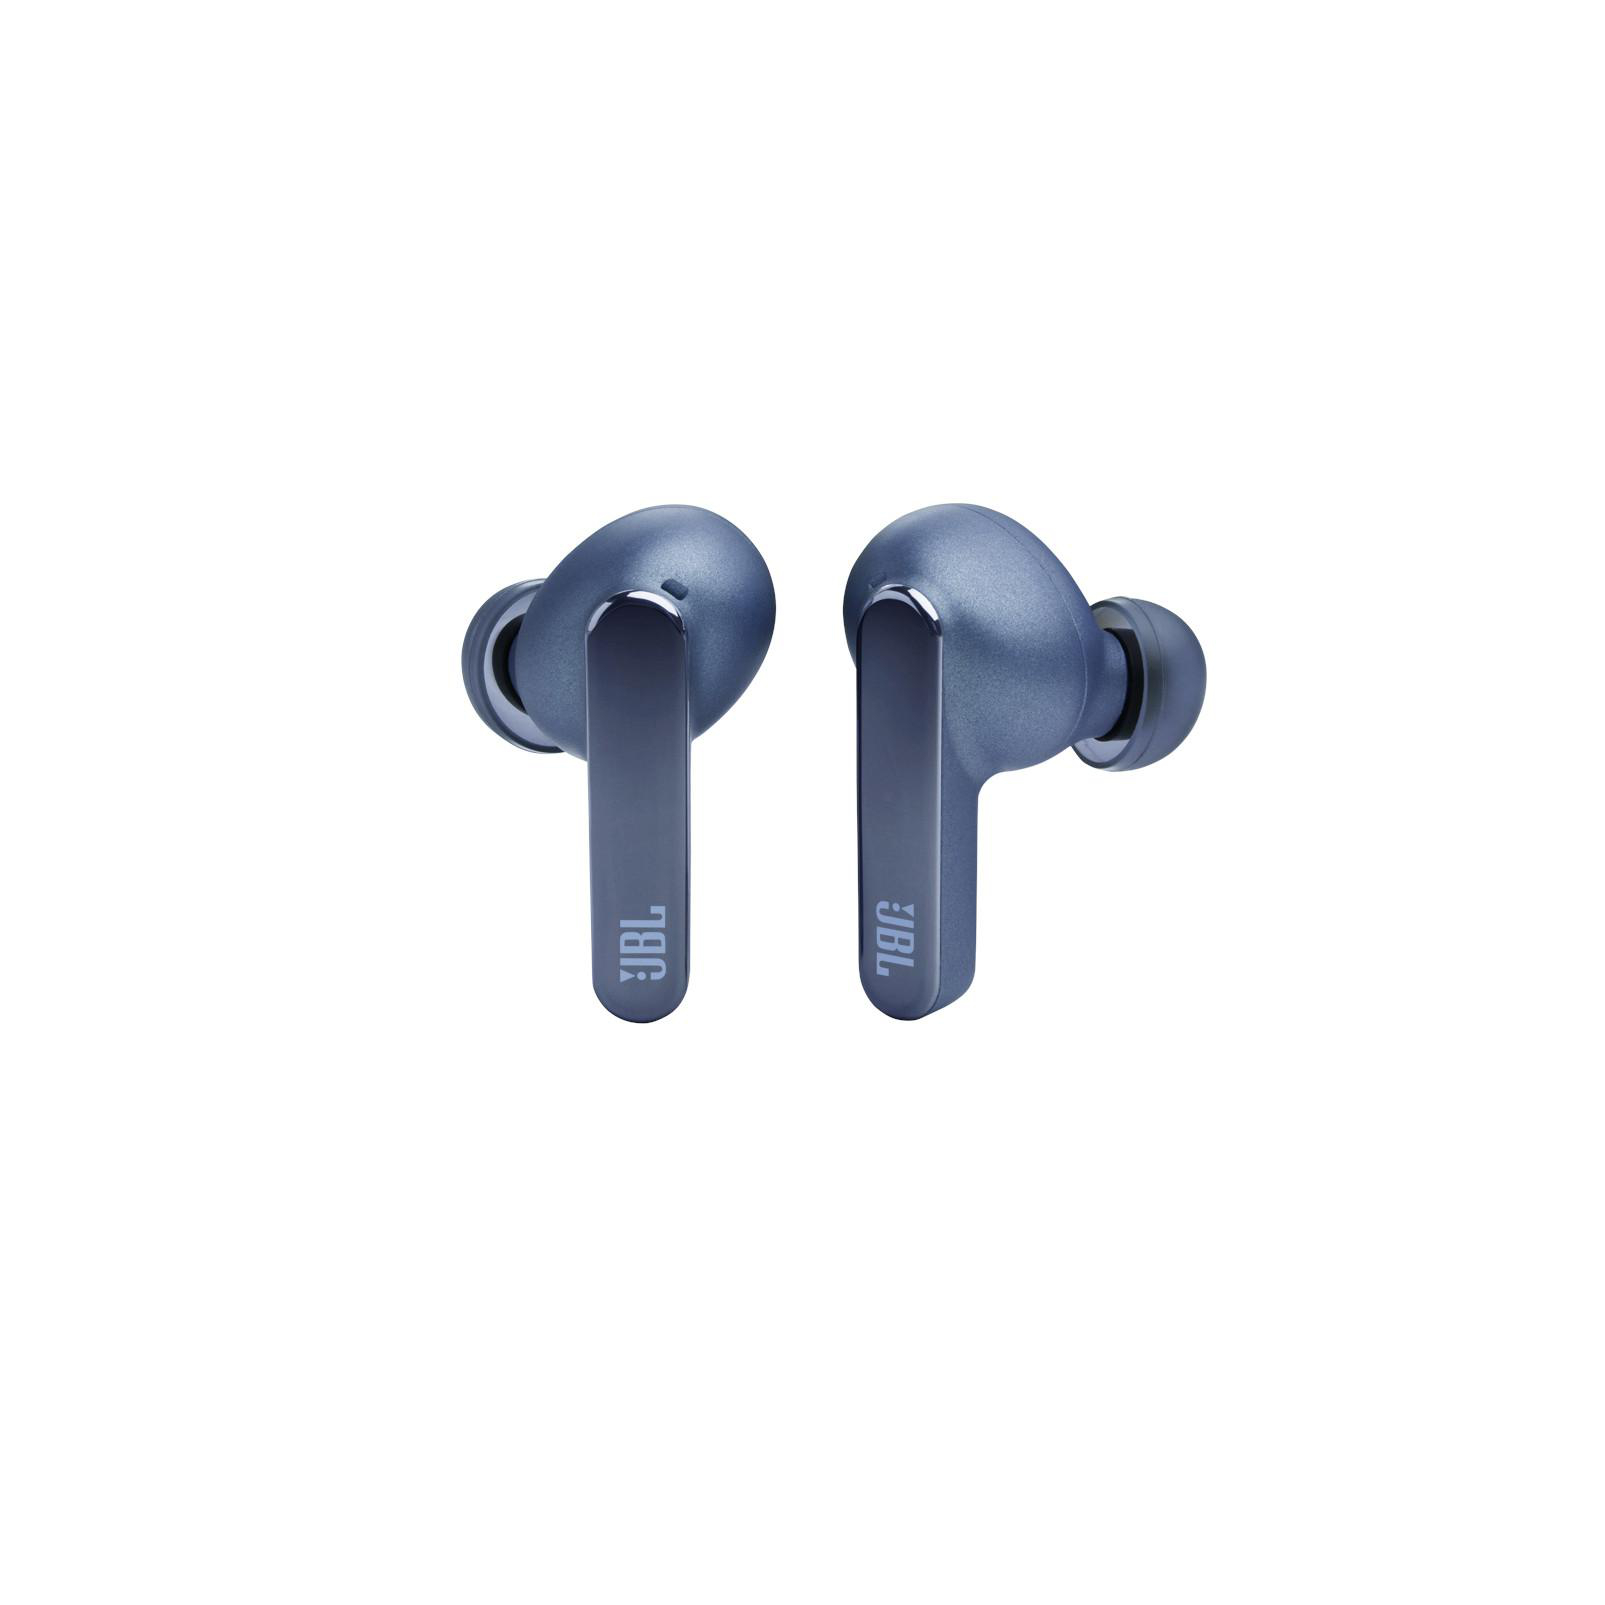 JBL Live Pro In-ear Bluetooth kompatibel, mit iOS 2 Smart Wireless, Blue echtes True adaptives Noise-Cancelling Android Kopfhörer Ambient, 